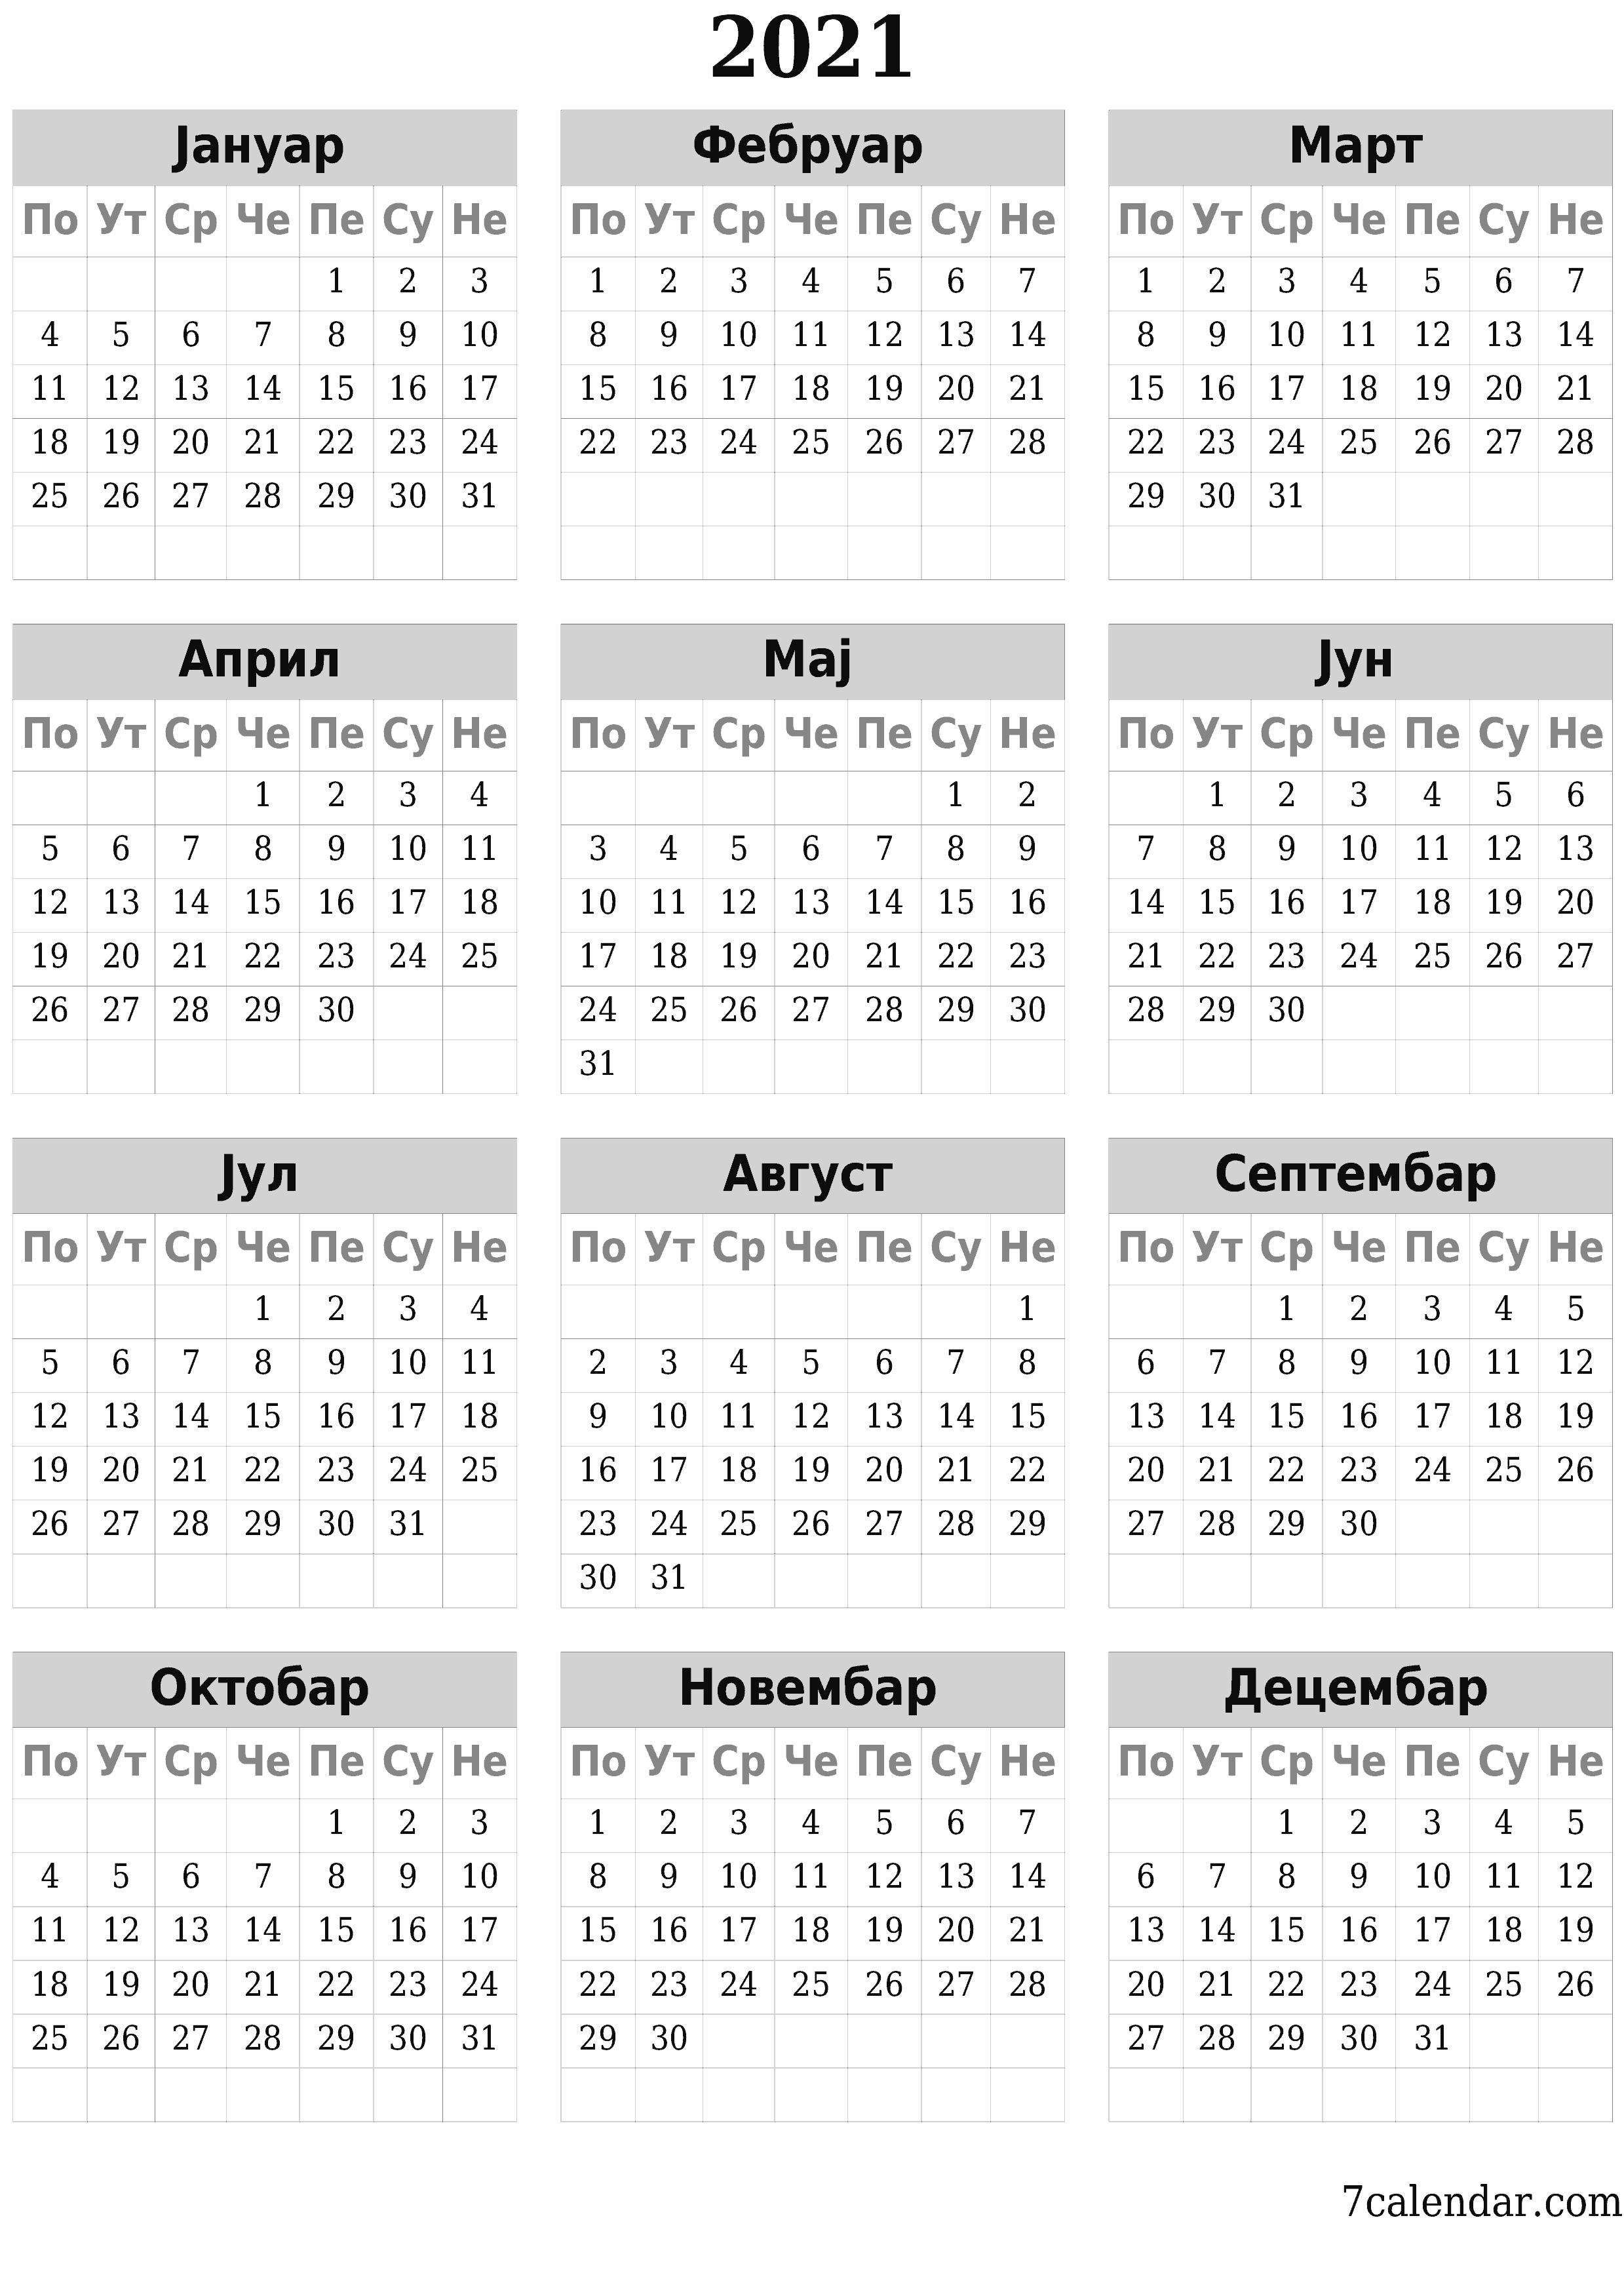  за штампање зидни шаблон а бесплатни вертикальниј Годишње календар Јануар (Јан) 2021